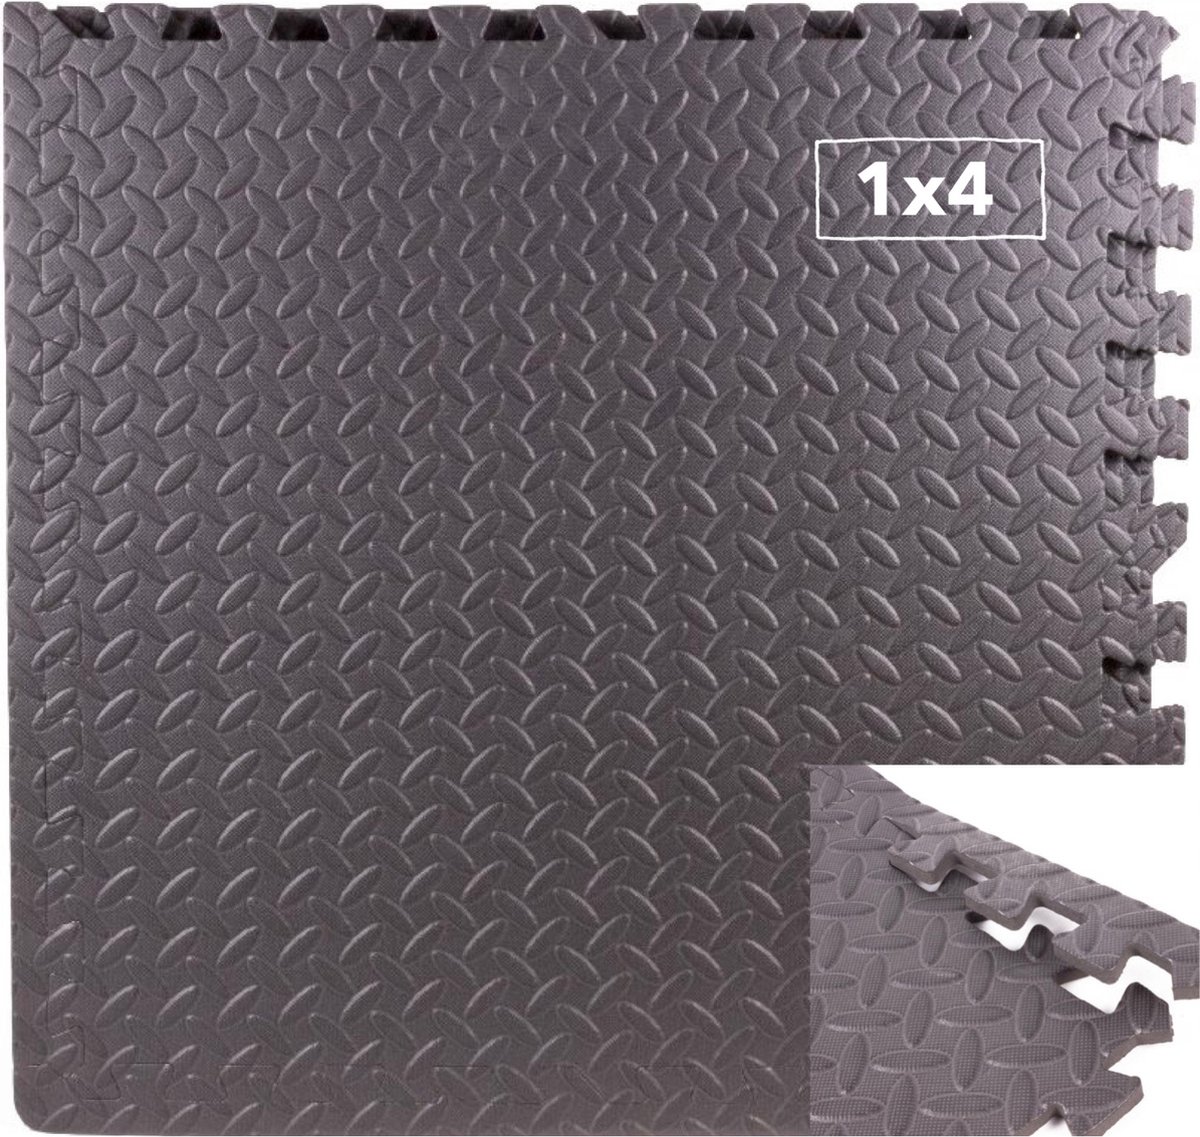 Fitnessmat - Puzzelmat - Sportmat - Yogamat - 4 stuks - 60x60x1,2 cm - Antraciet grijs zacht- Totaal 120x120cm